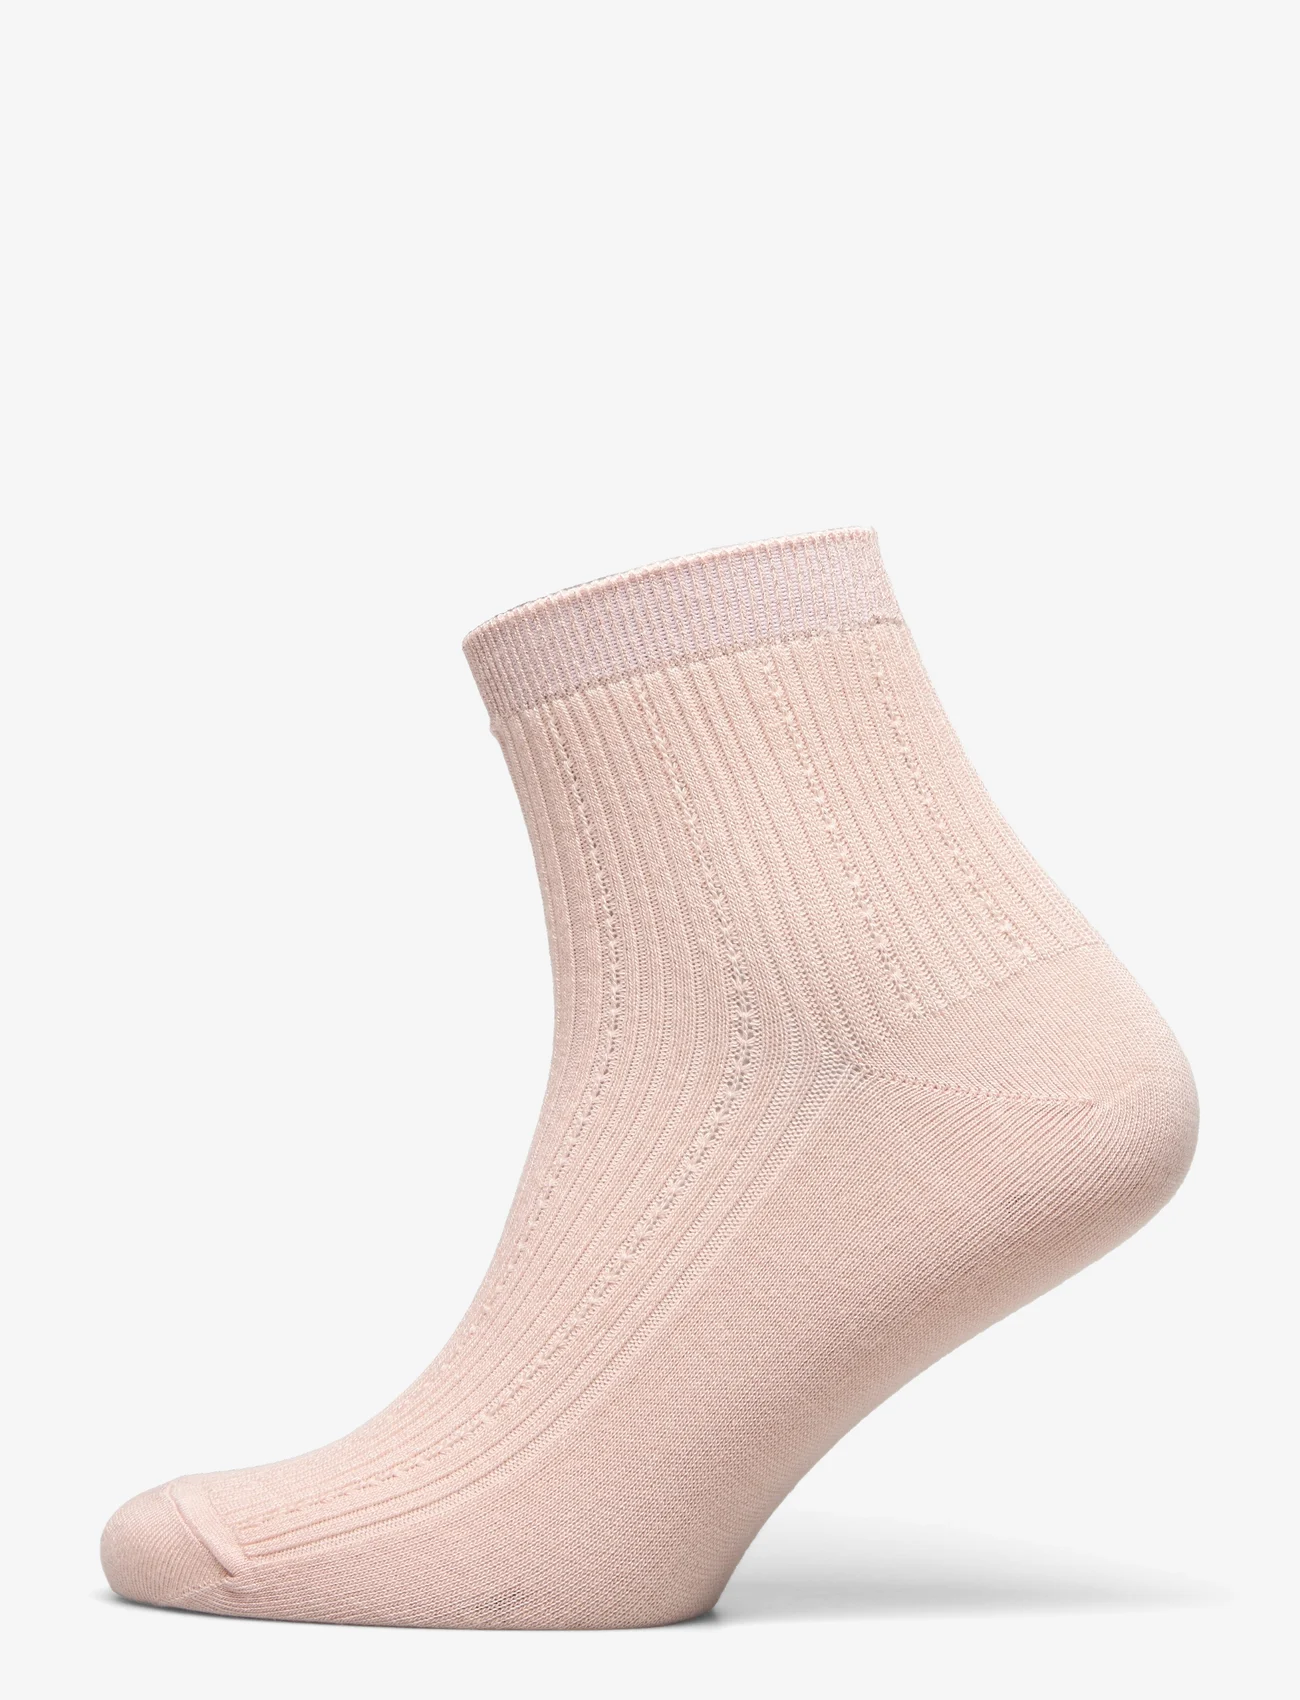 mp Denmark - Darya sock - laagste prijzen - rose dust - 0